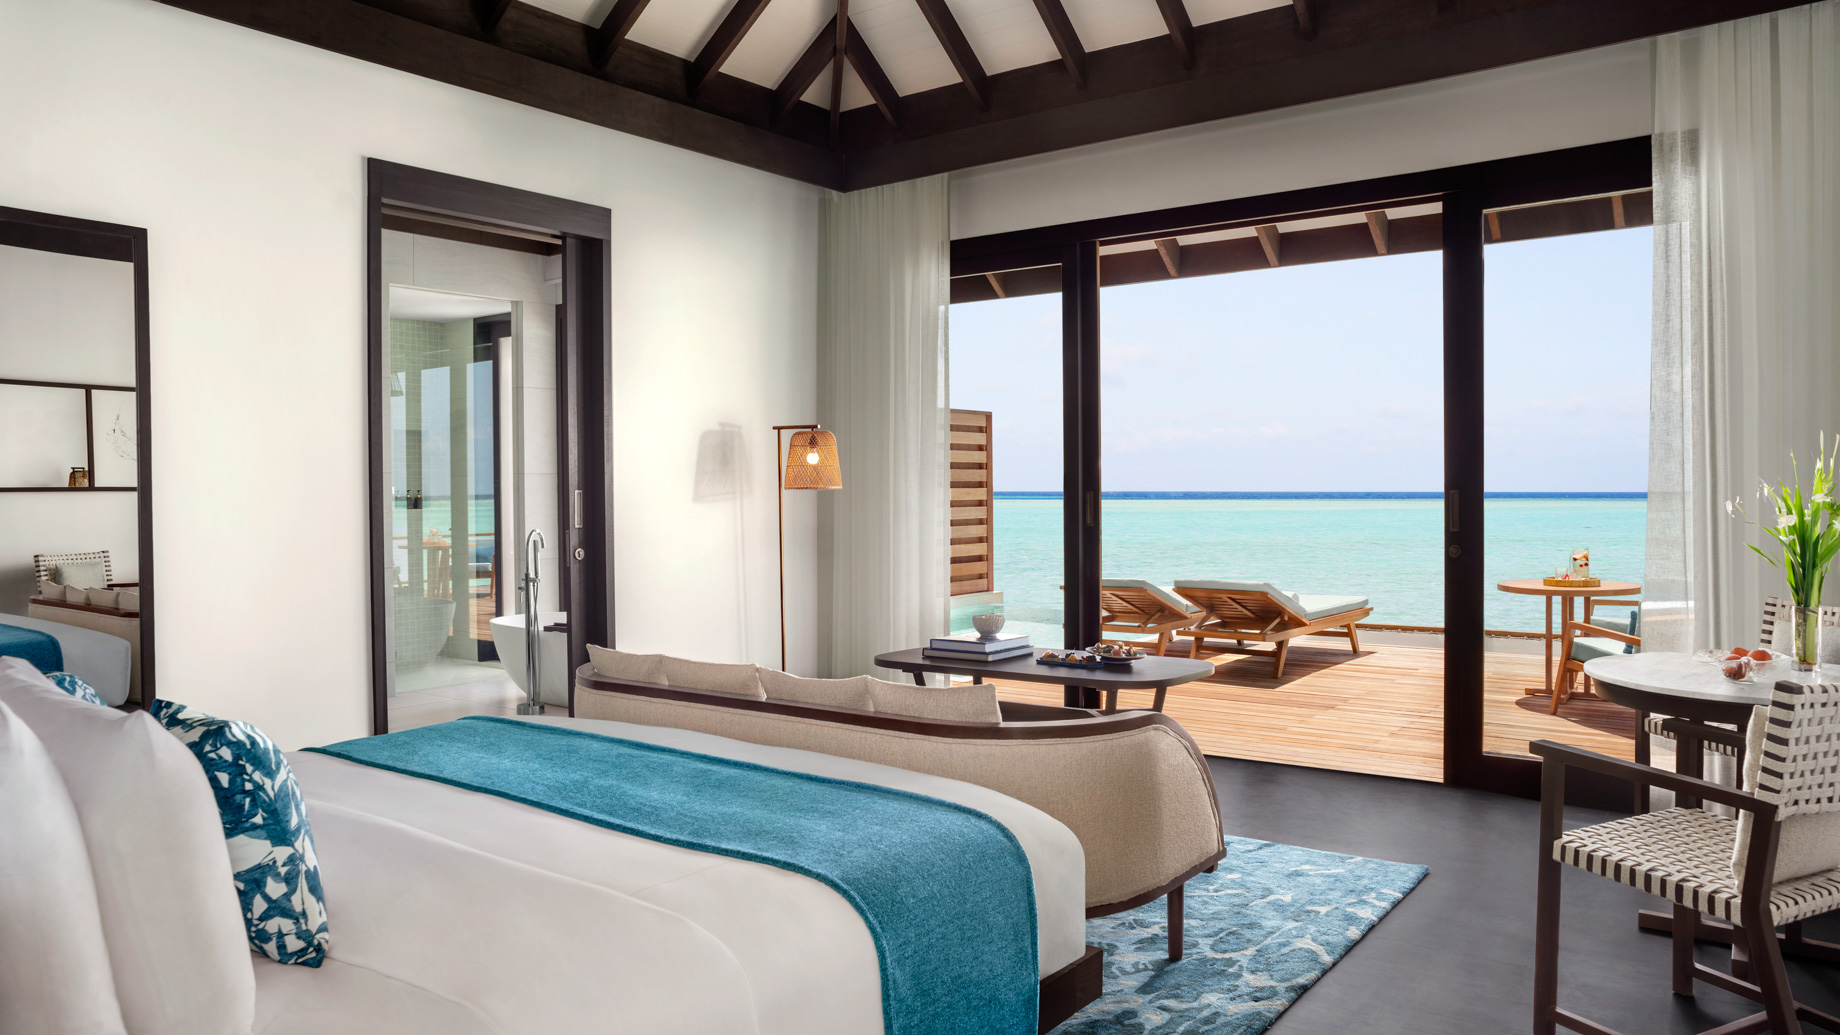 Anantara Veli Maldives Resort – South Male Atoll, Maldives – Deluxe Over Water Pool Villa View